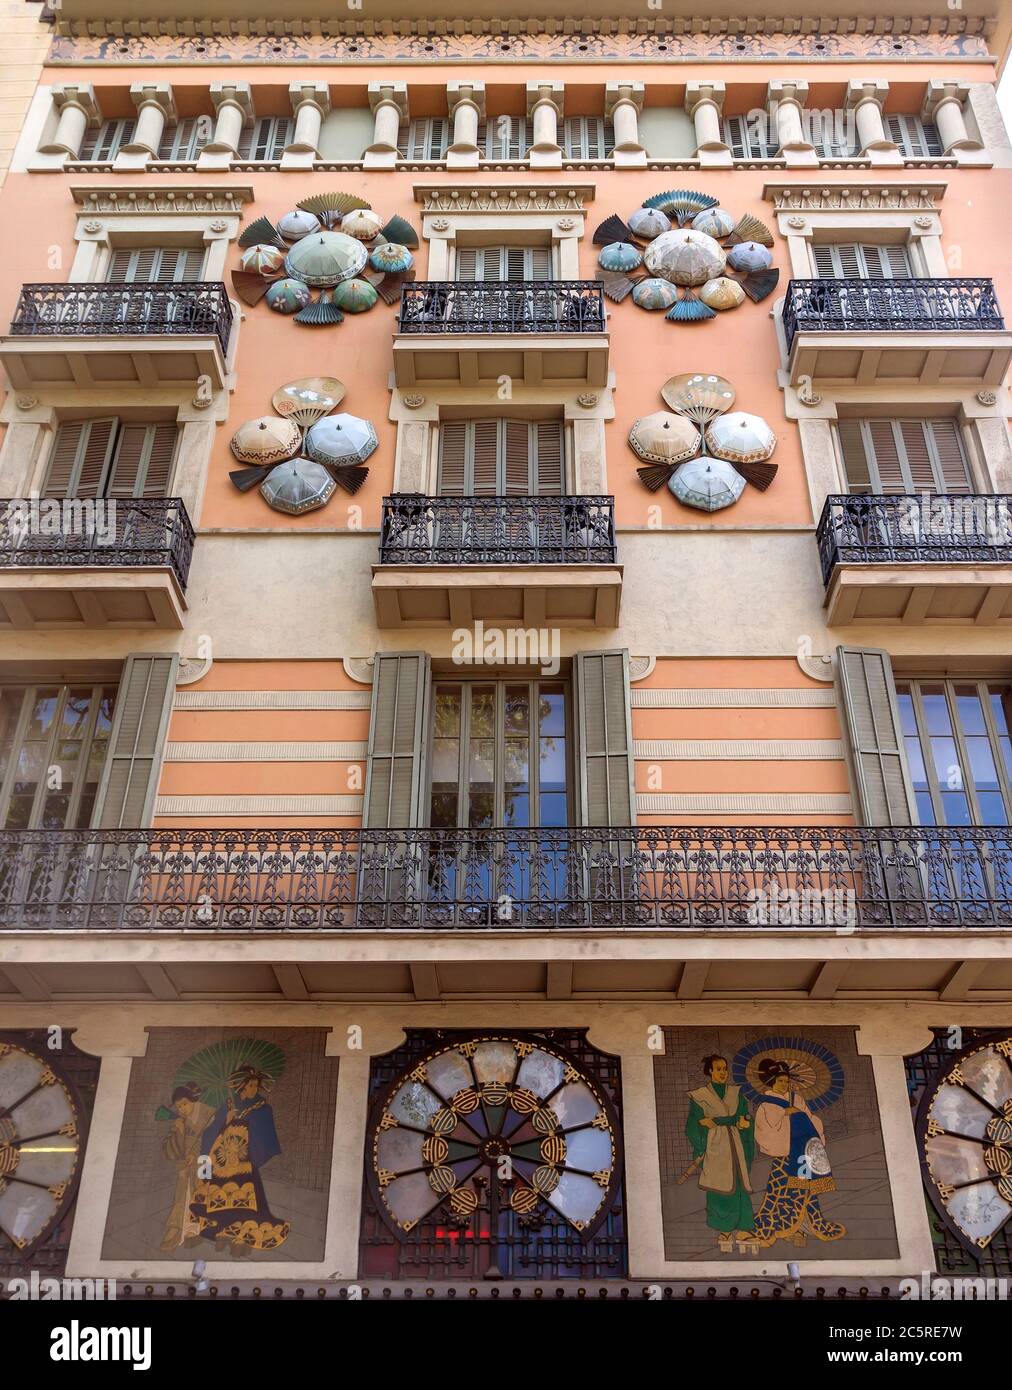 BARCELONA, SPANIEN - 6. JULI 2015: Casa Bruno Cuadros genannt Regenschirmhaus an der La Rambla Straße in Barcelona, Spanien. Barcelona, Spanien - 6. Juli 2015: C Stockfoto